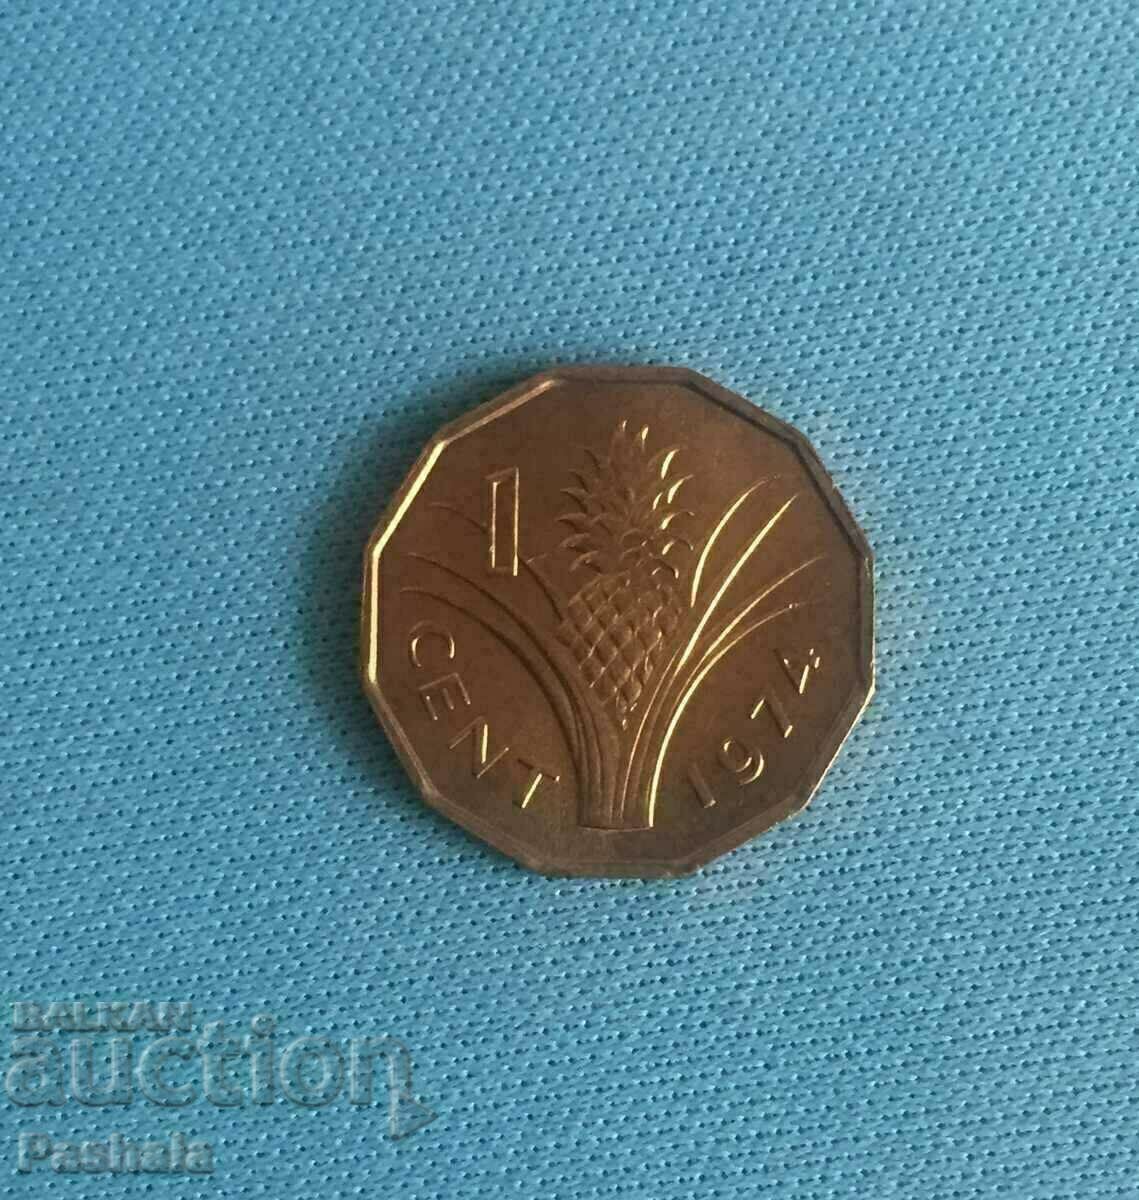 Swaziland 1 cent 1974